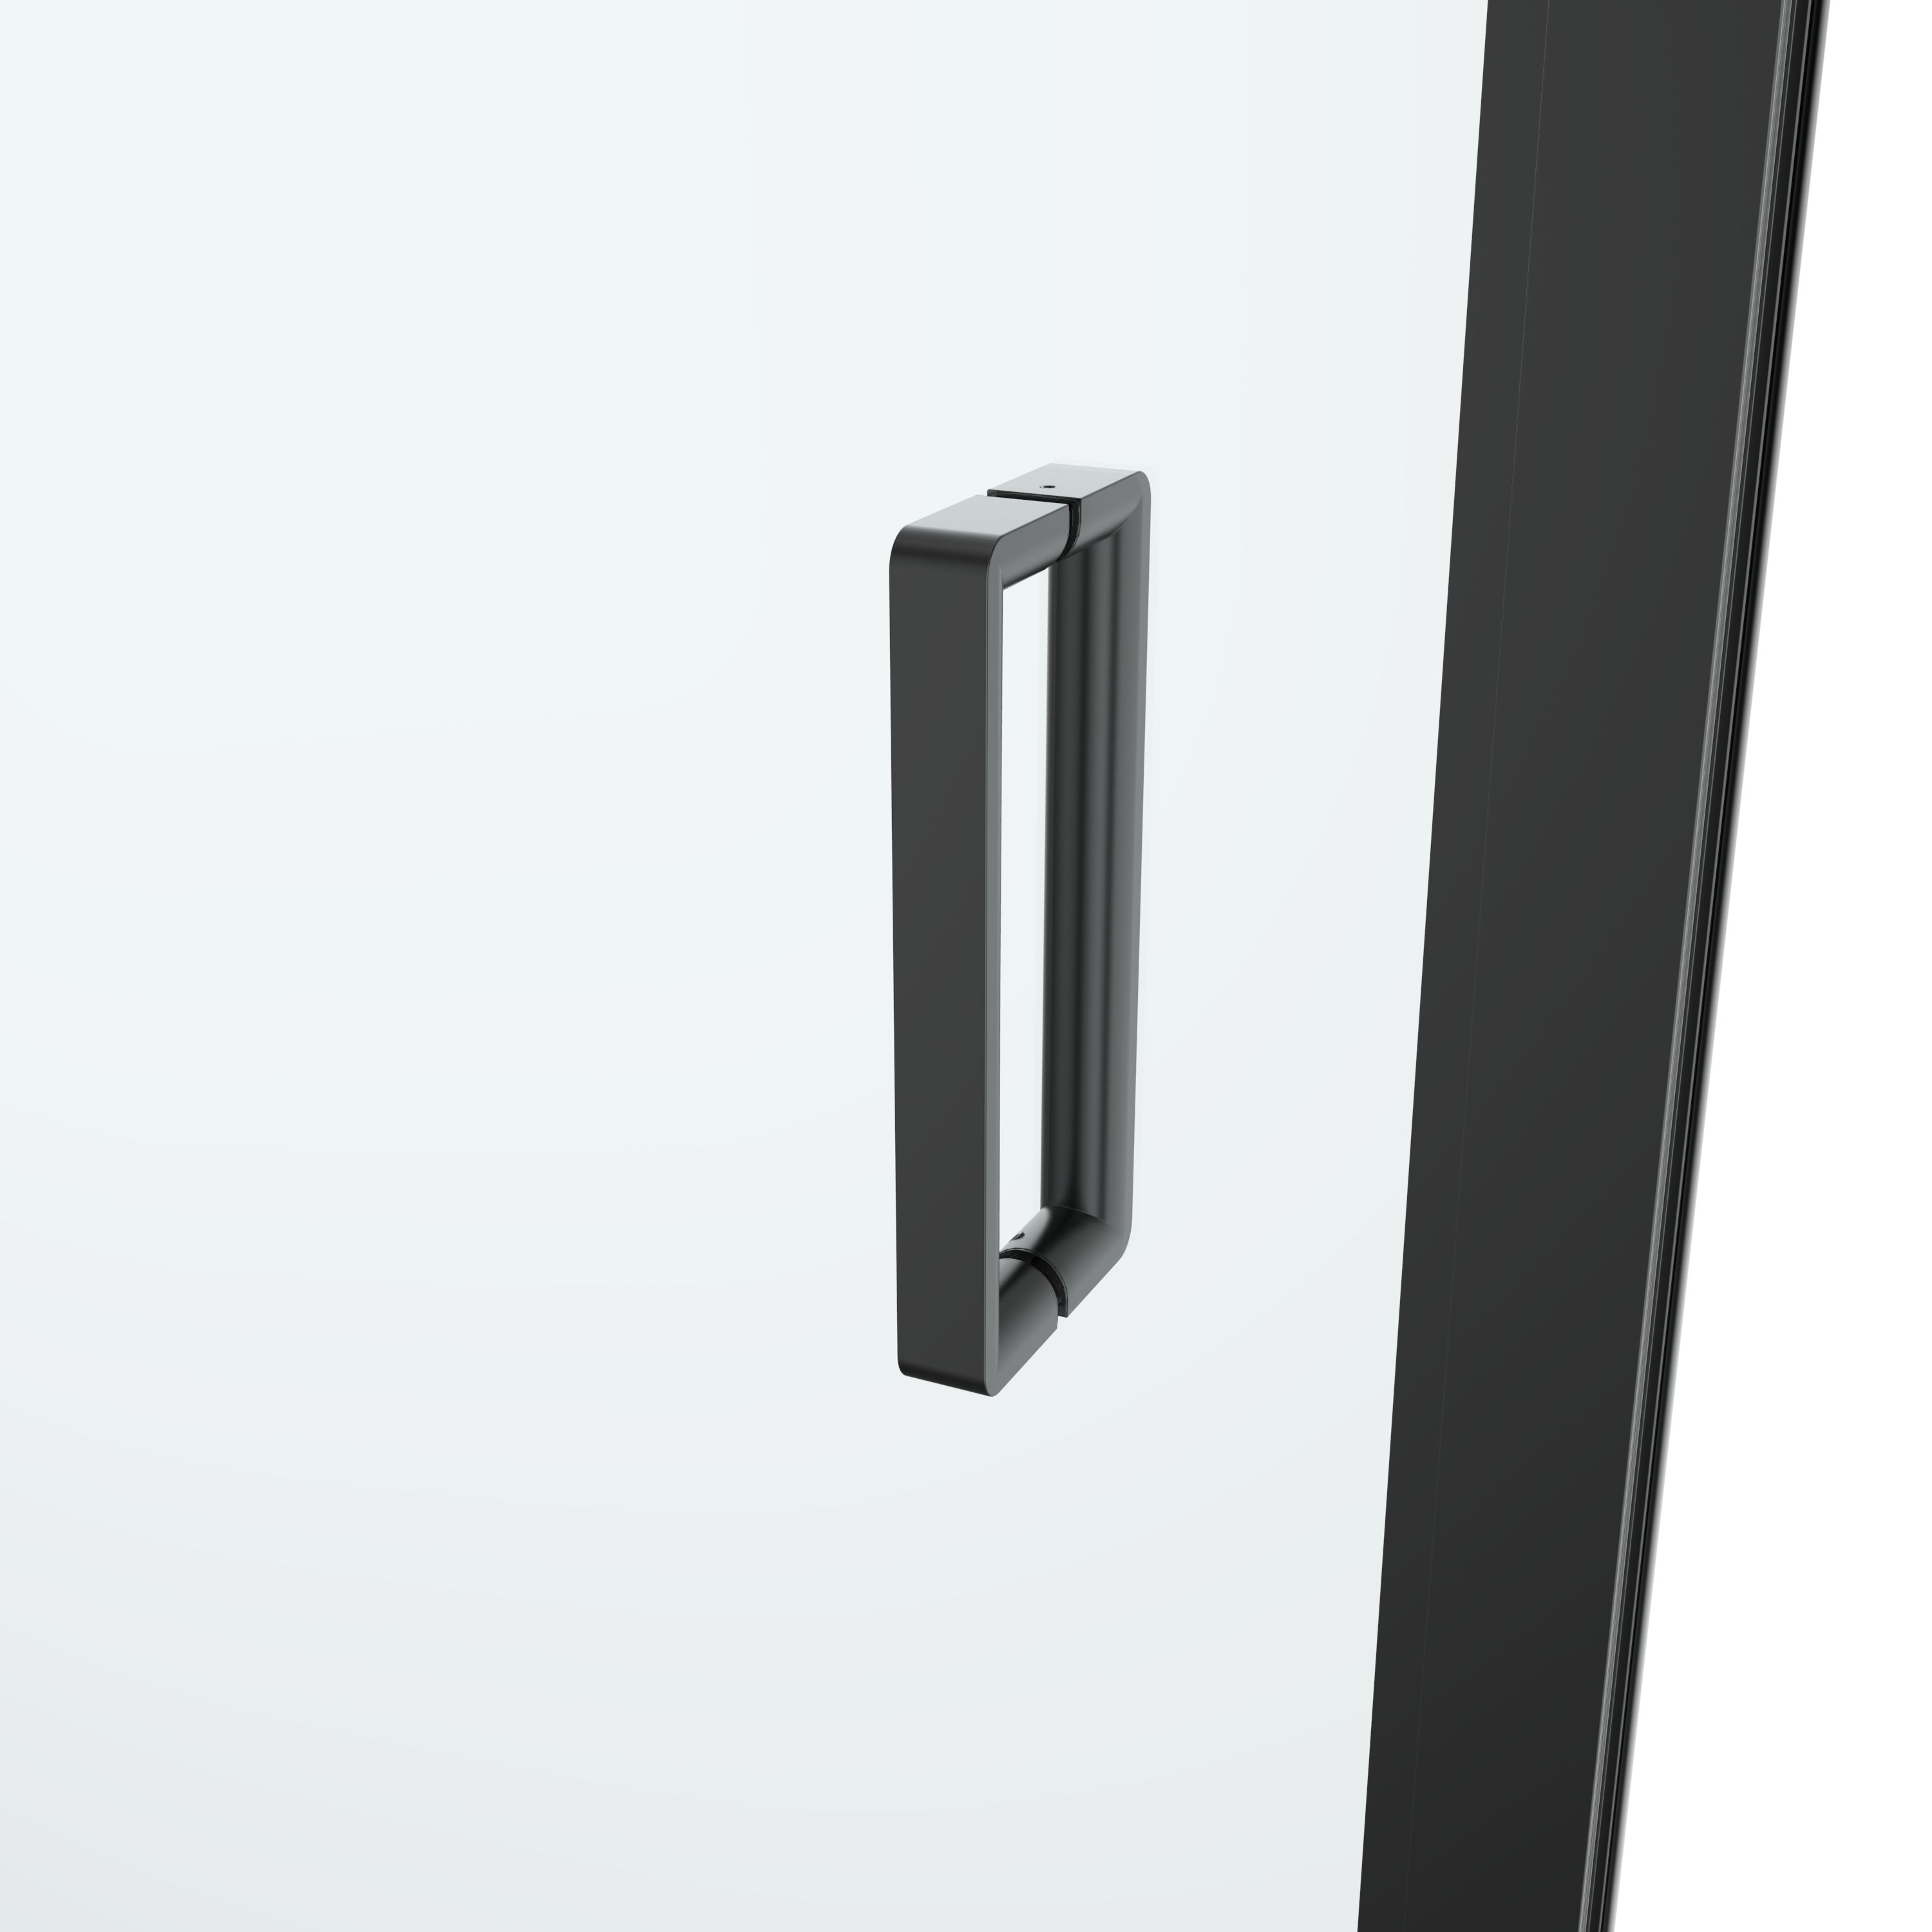 GoodHome Ledava Minimal frame Black Chrome effect Clear glass Half open pivot Shower Door (H)195cm (W)100cm